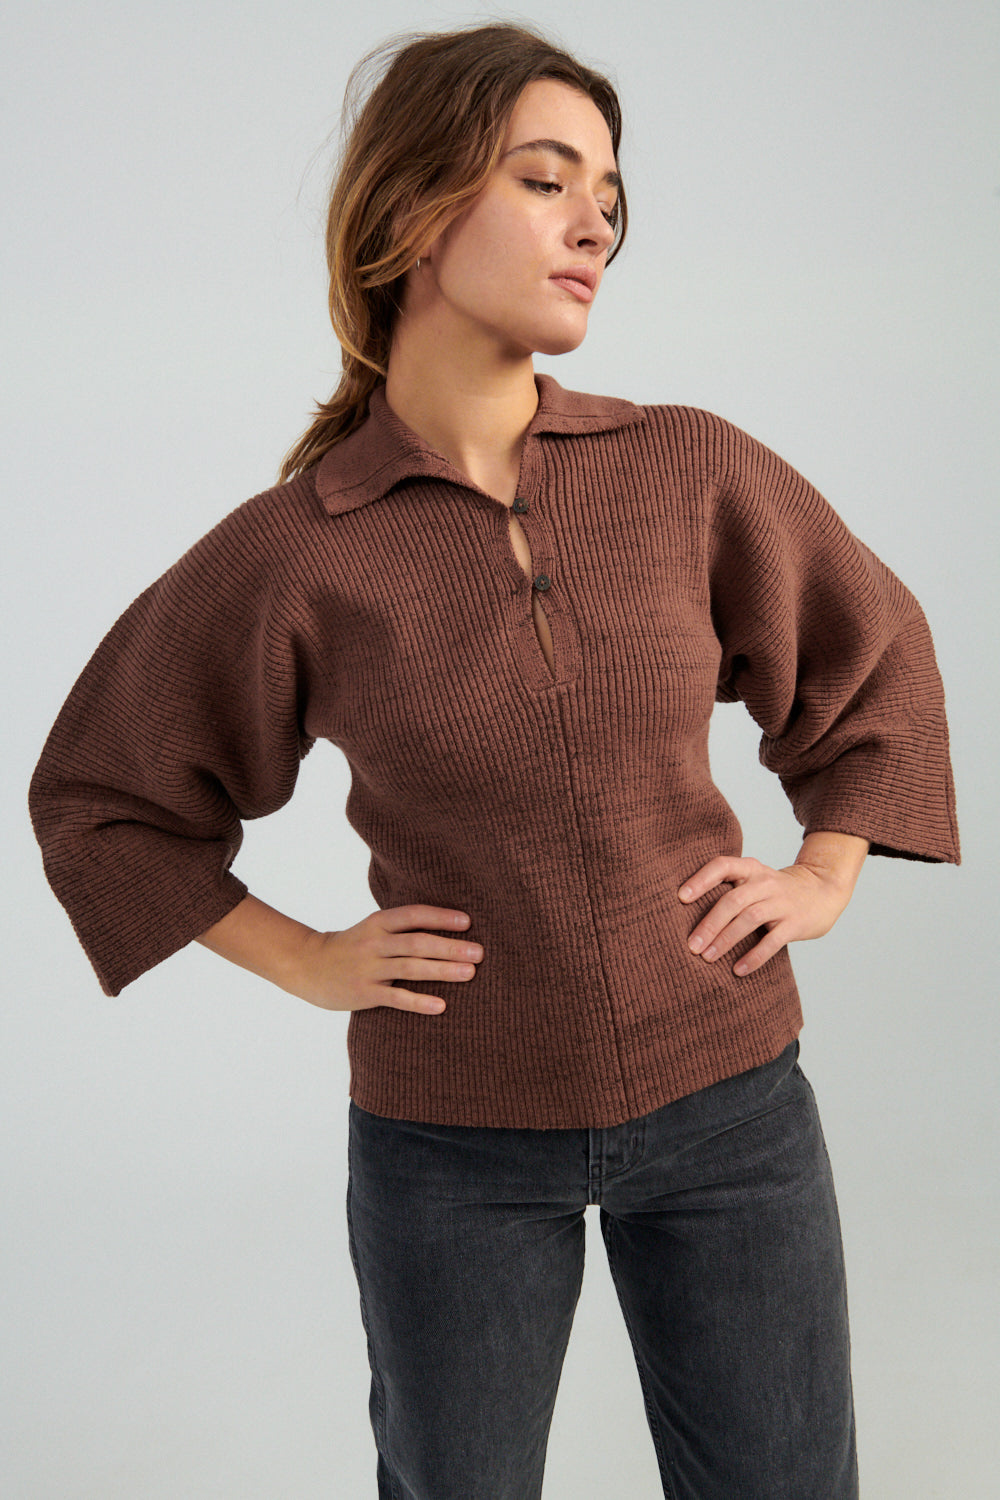 Mara Hoffman Ama Sweater brown-Idun-St. Paul